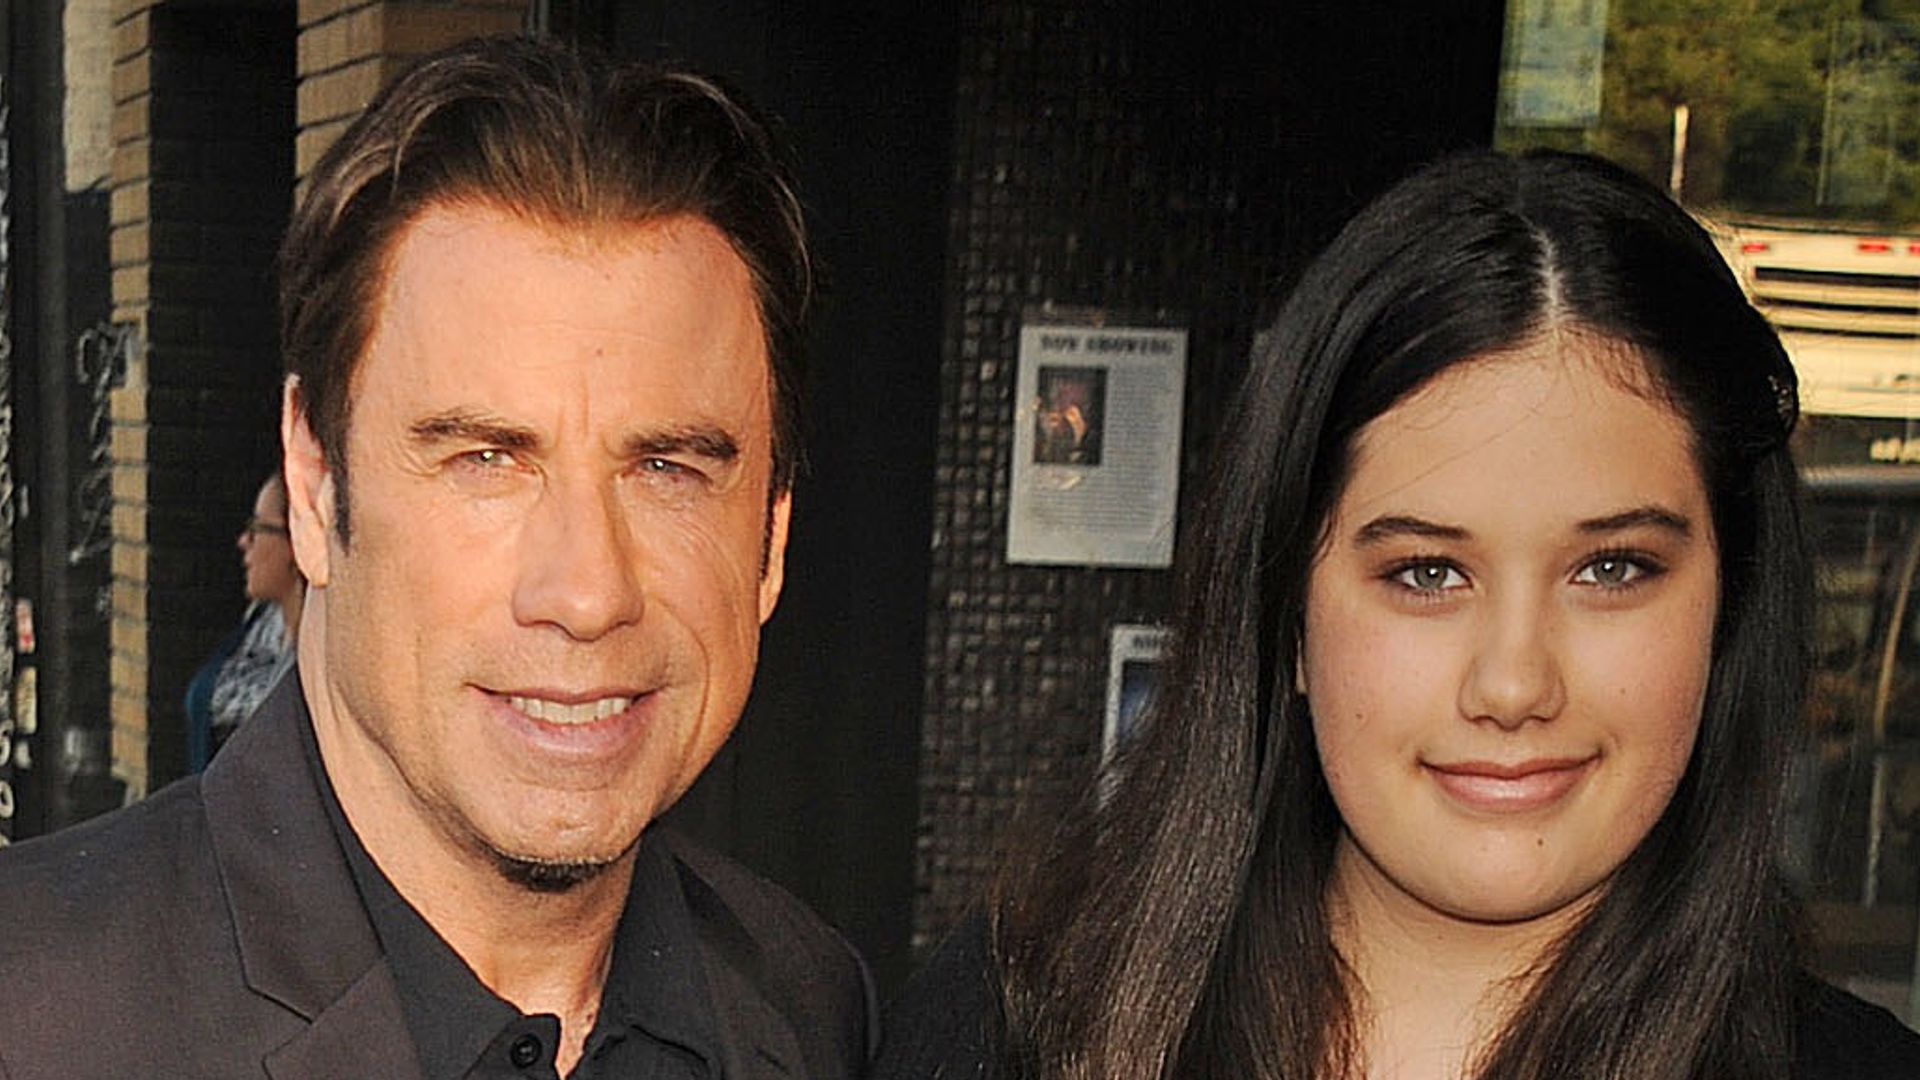 John Travolta and Ella Travolta stood next to each other